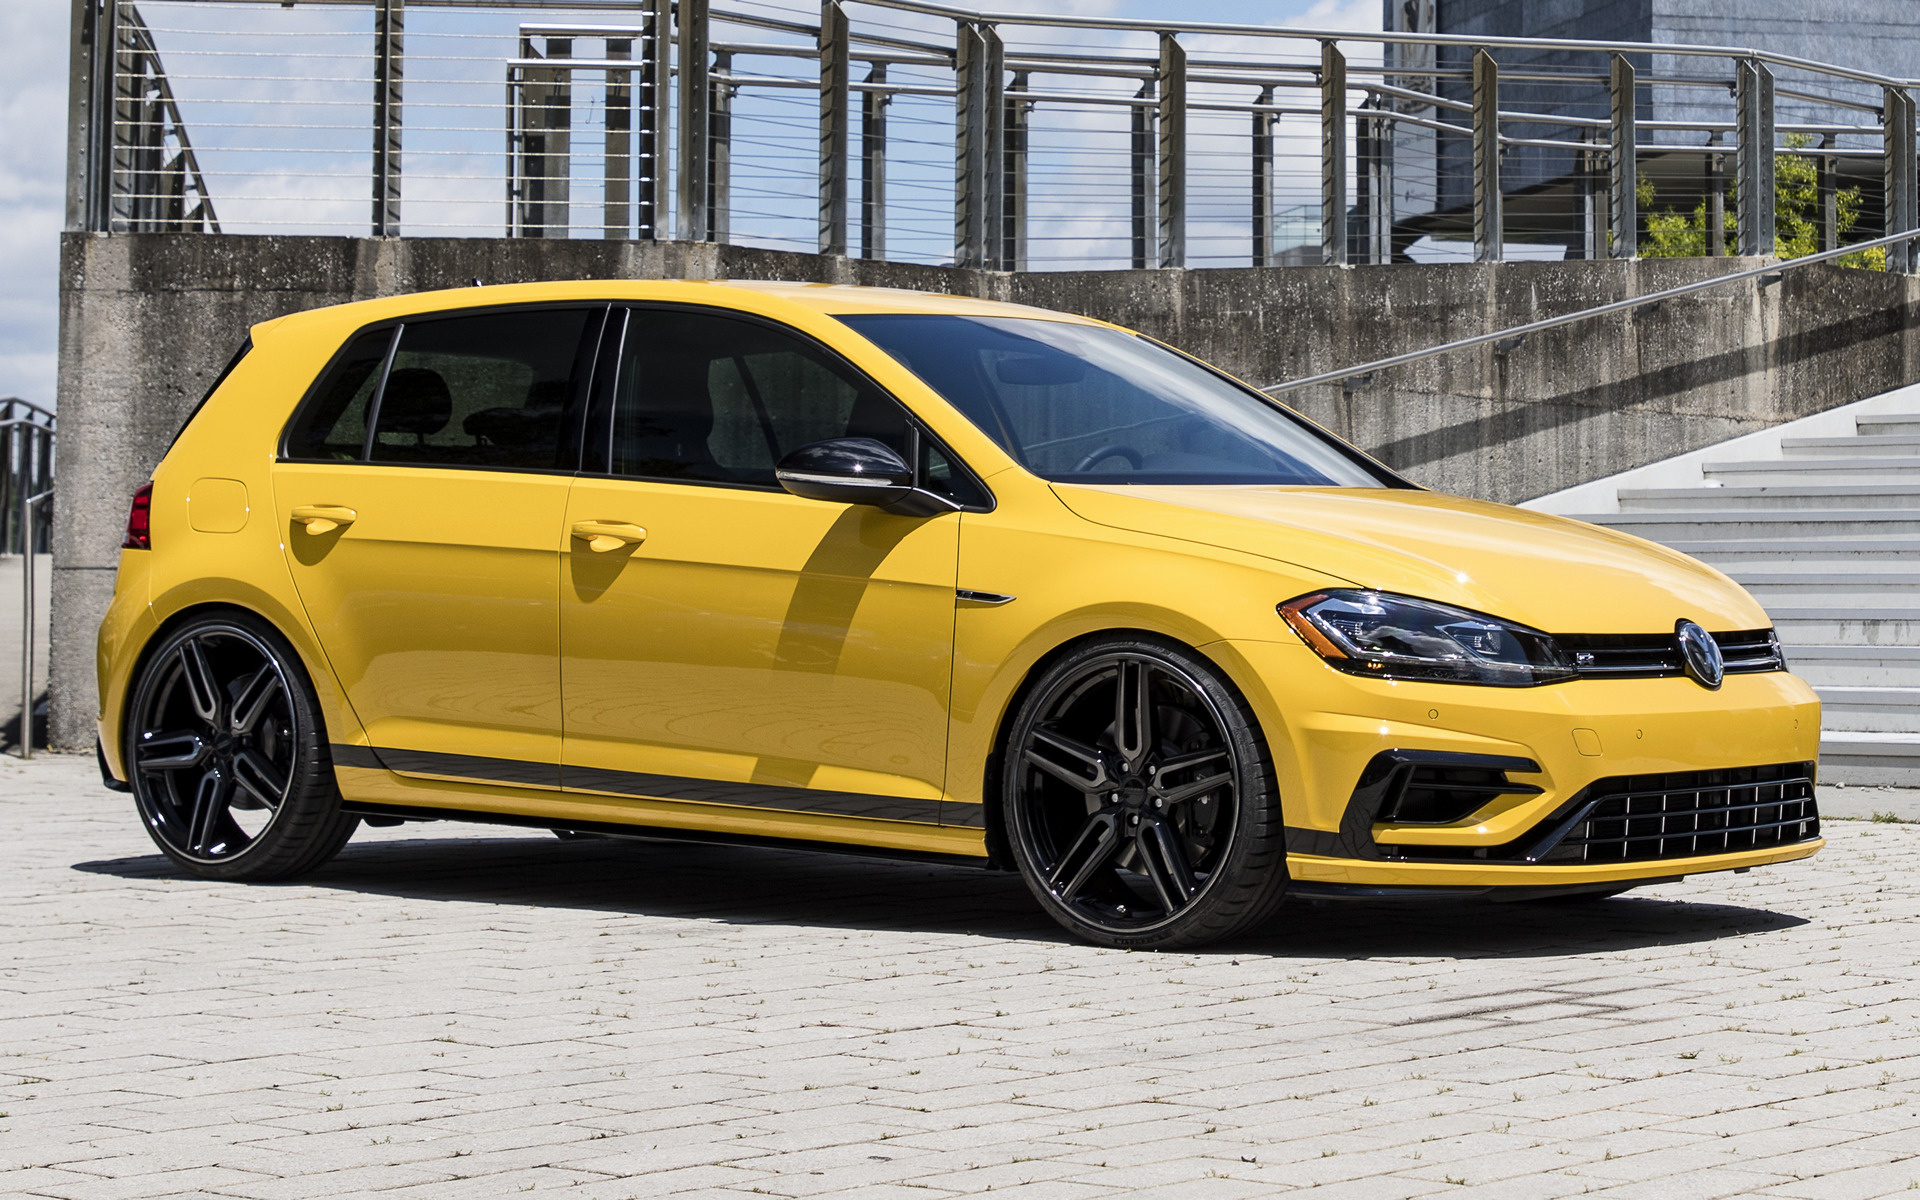 2019 Volkswagen Golf R Spektrum Concept Wallpapers and HD Images